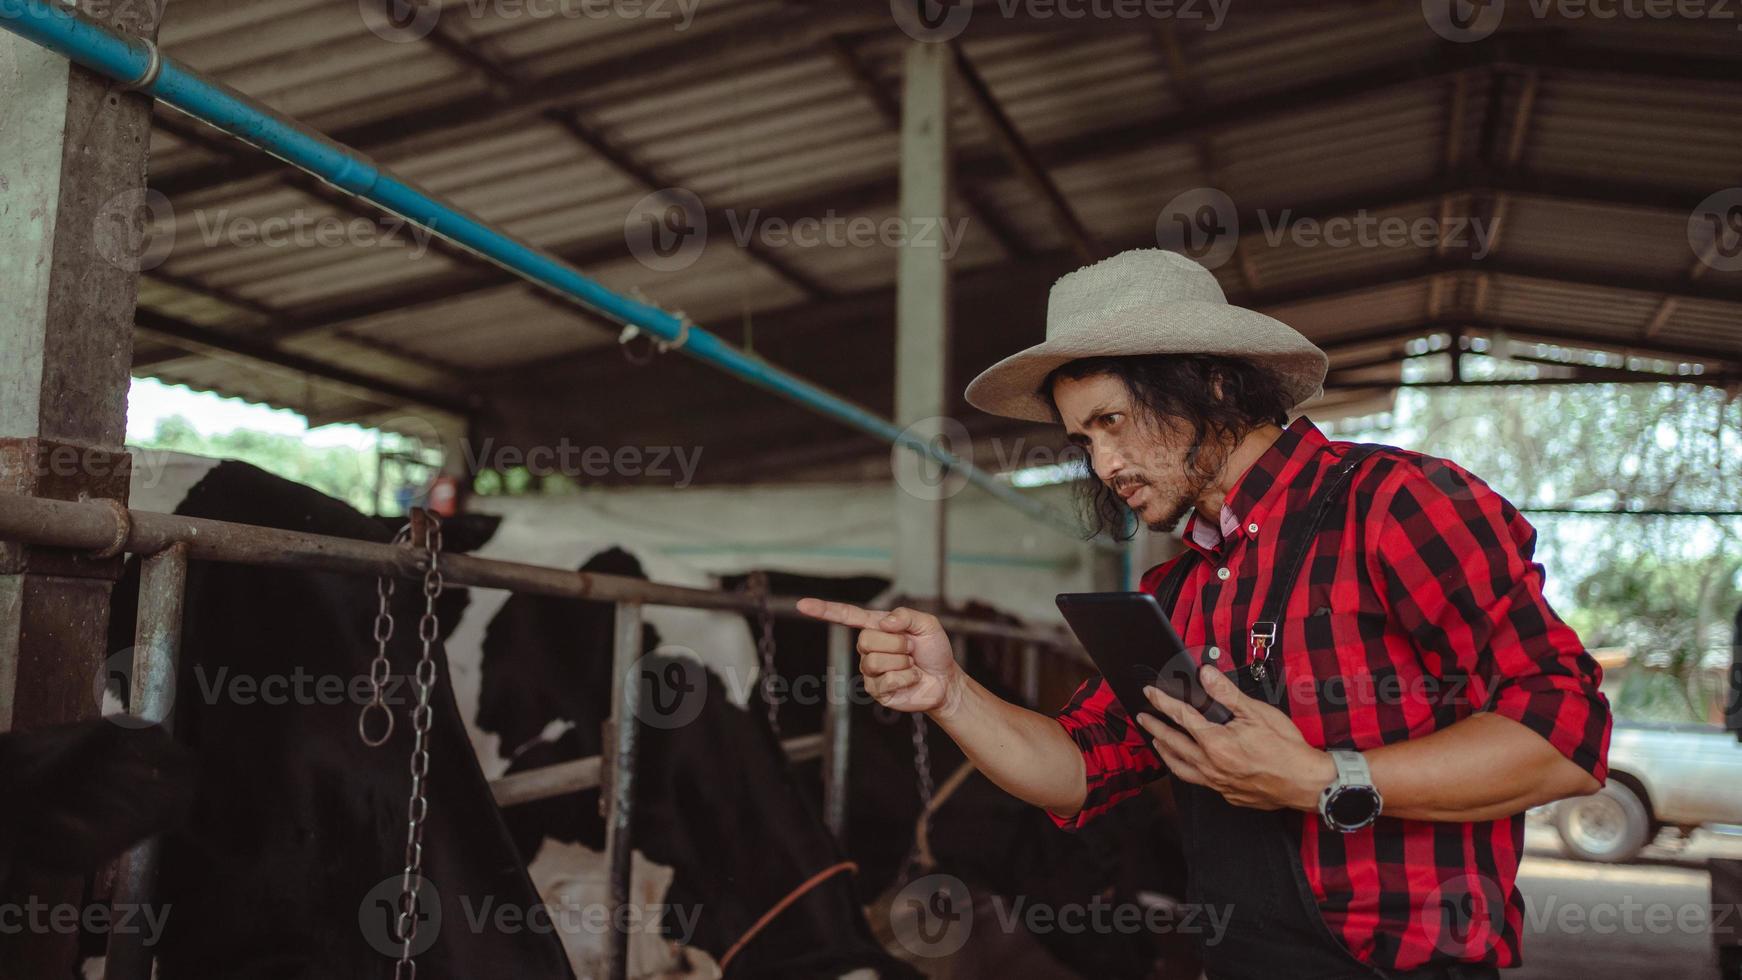 agricultor masculino usando tablet para verificar seu gado e qualidade do leite na indústria de laticínios .agriculture, agricultura e pecuária conceito, vaca na fazenda de laticínios comendo feno, estábulo. foto